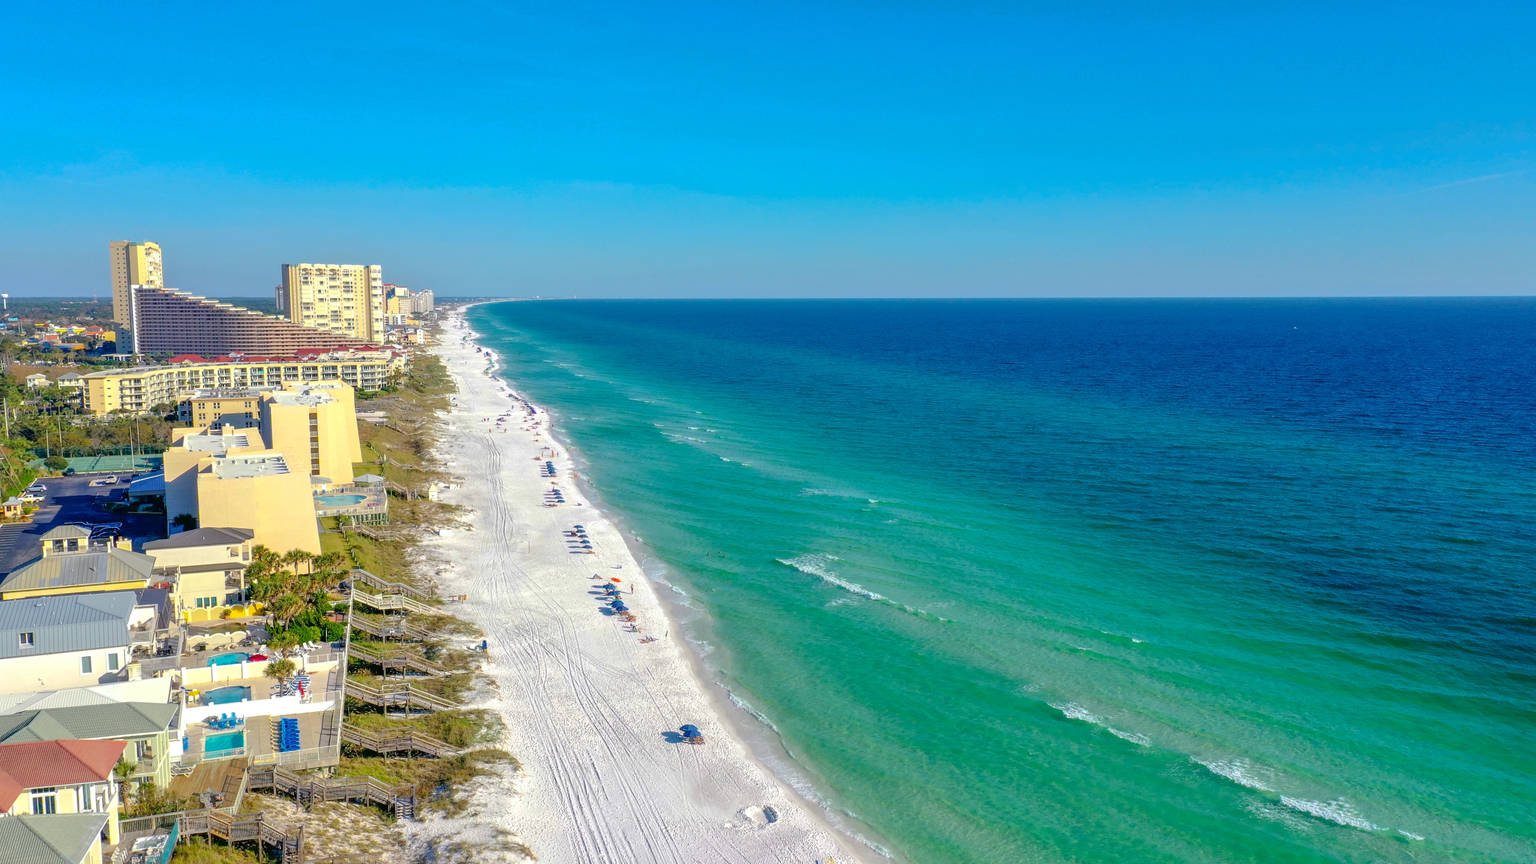 Miramar Beach, Florida Vacation Rentals: House Rentals, Condos, & More